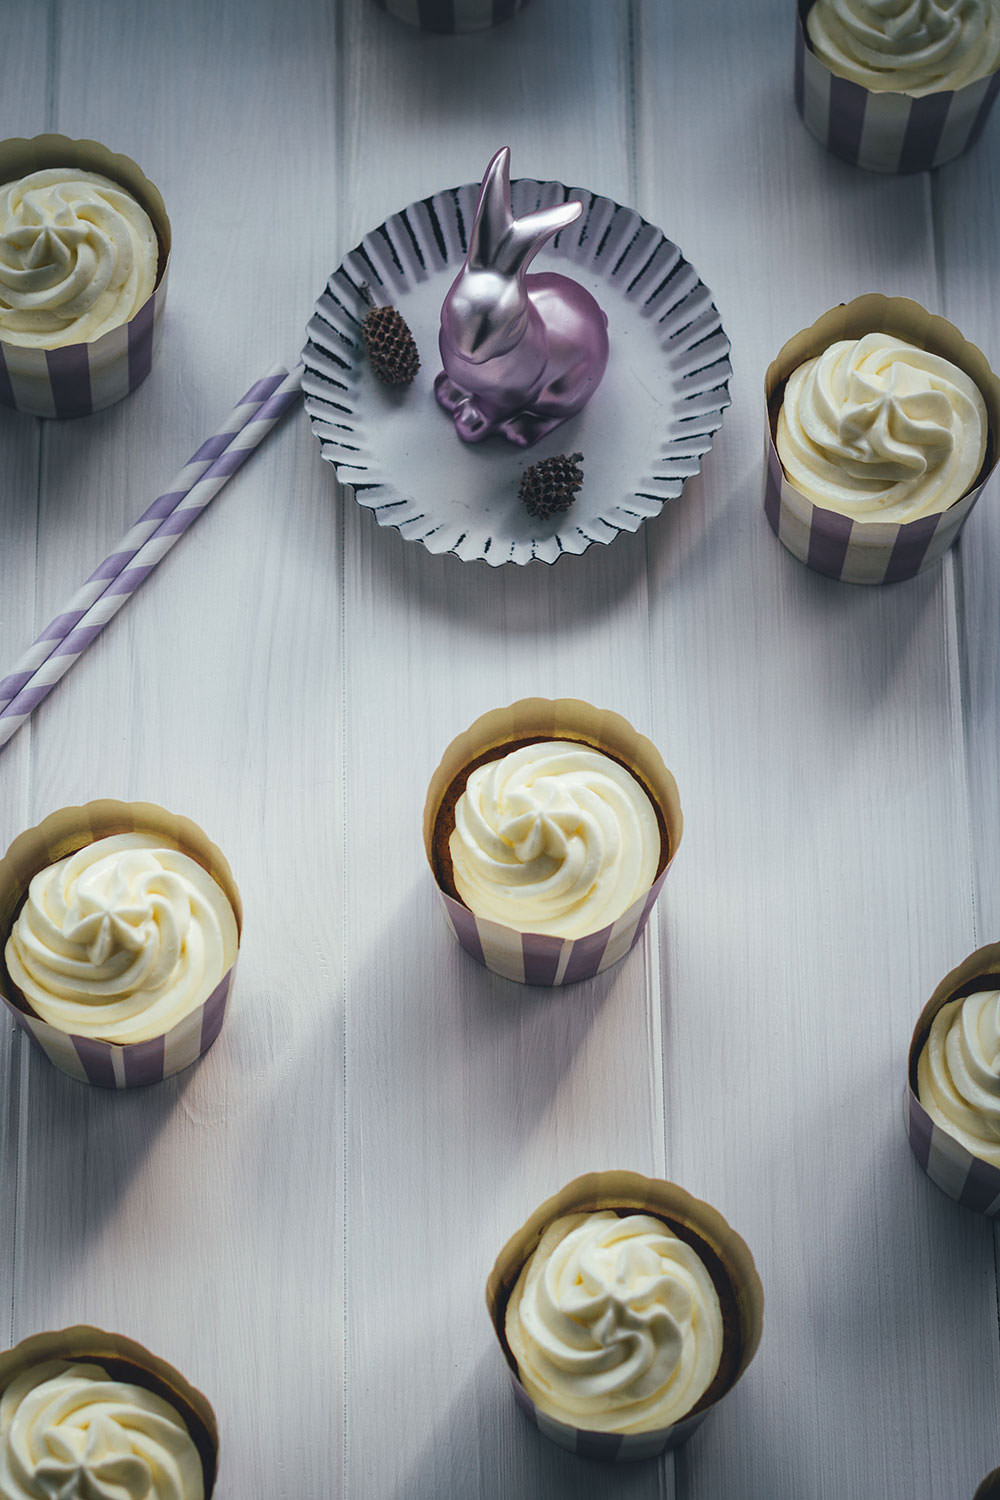 Rezept für saftige Carrot Cupcakes – klassischer Carrot Cake oder Rüblikuchen in Cupcake-Form | moeyskitchen.com #cupcakes #carrotcupcakes #carrotcake #möhrenkuchen #rüblikuchen #rüblitorte #ostern #carrotcakecupcakes #backen #rezepte #foodblogger